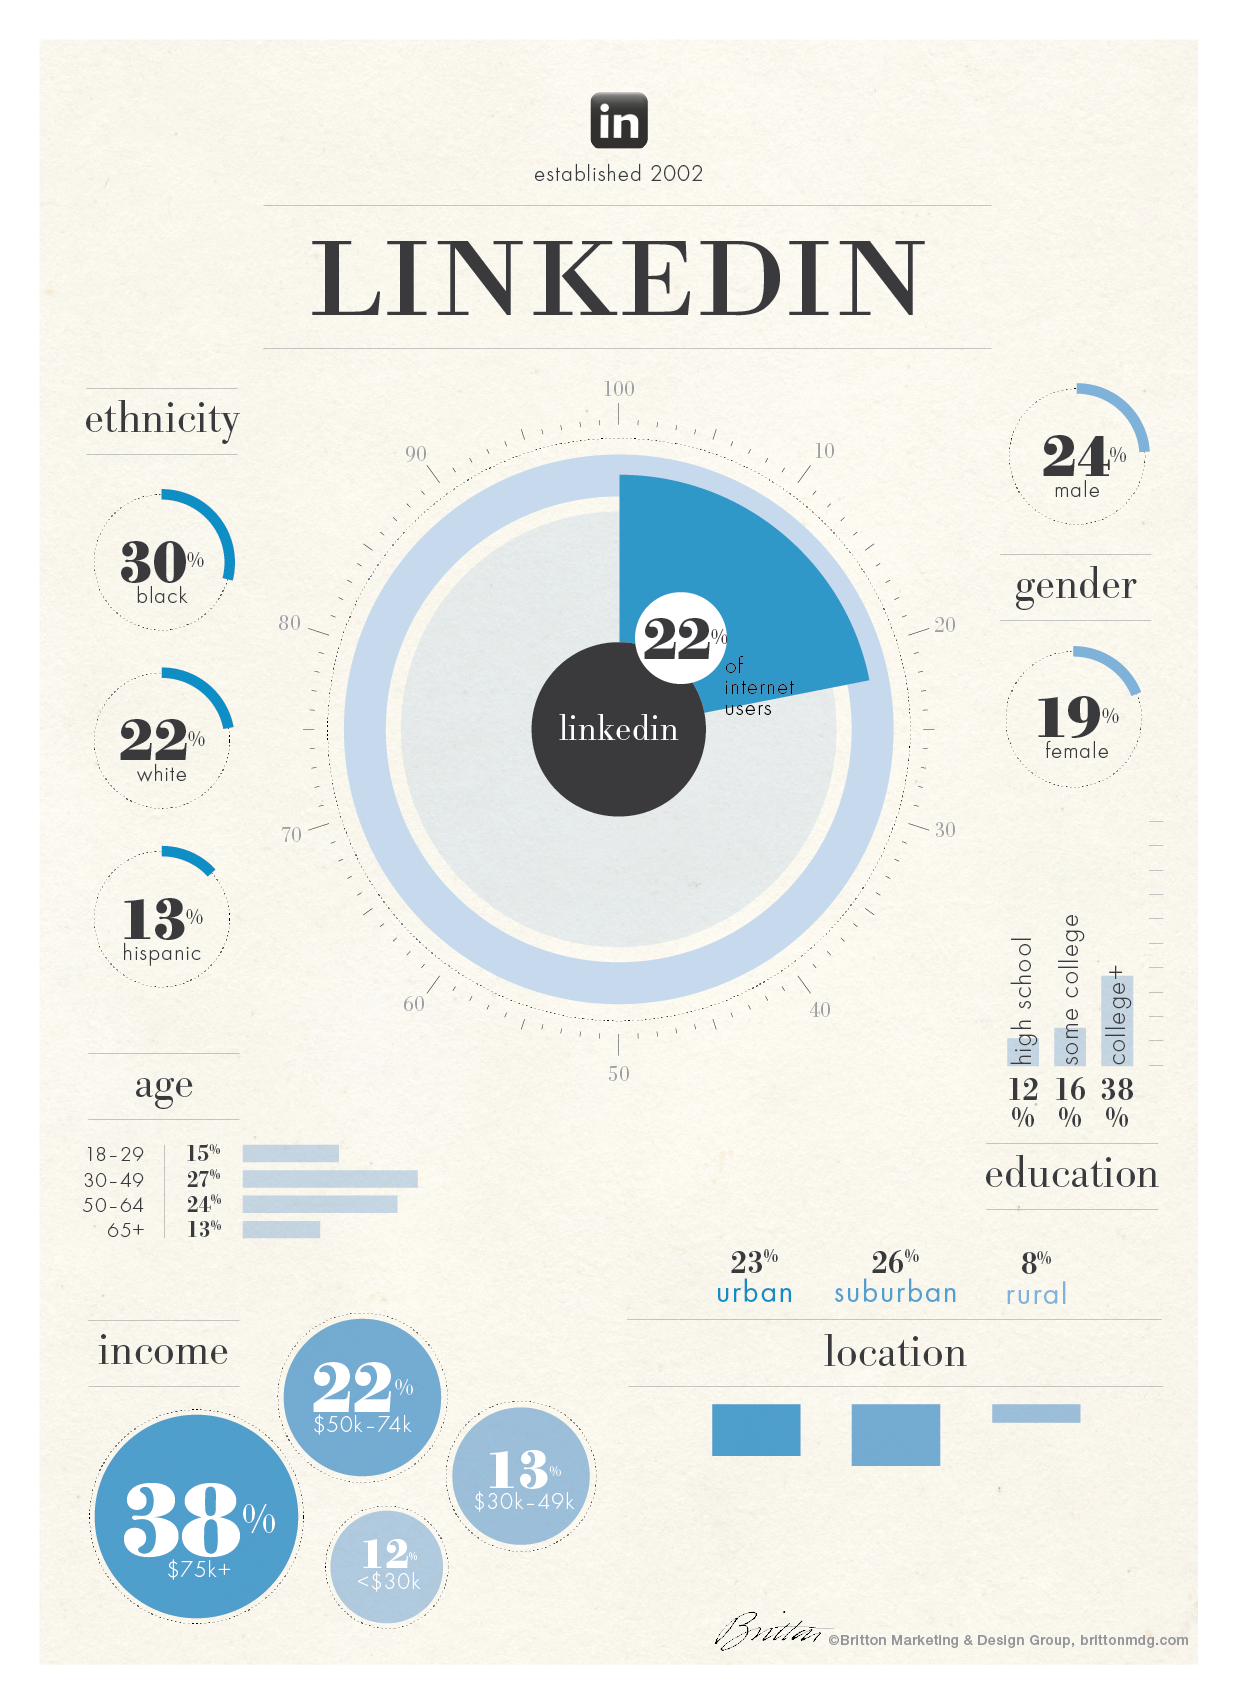 #Infographic: The demographics of #LinkedIn users - #socialmedia